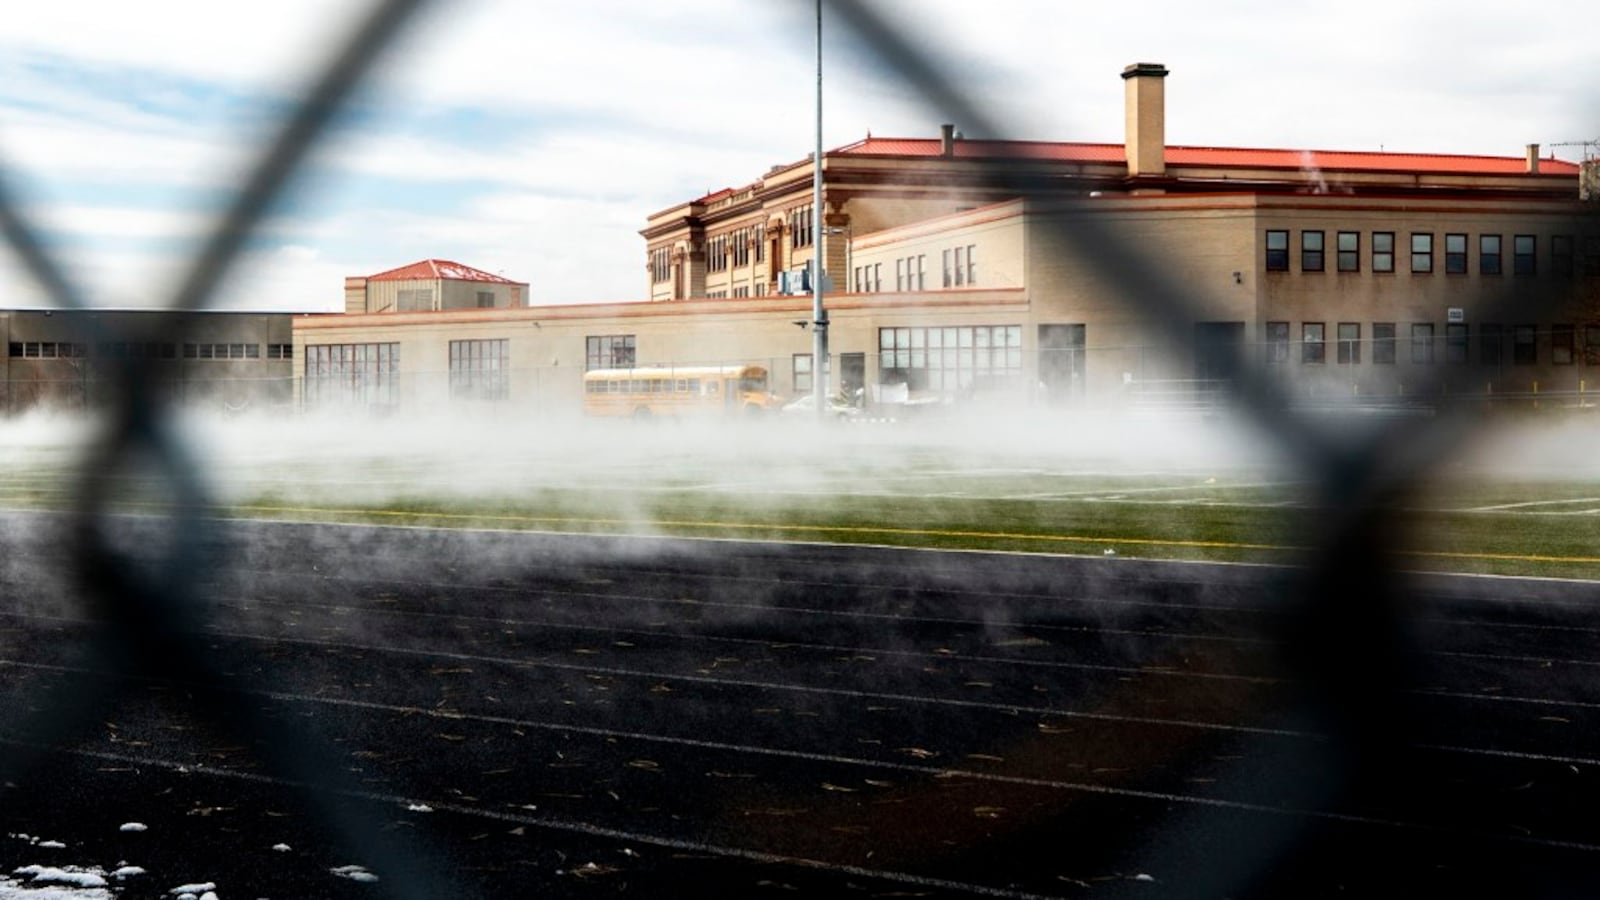 A high school as seen through a chain link fence.